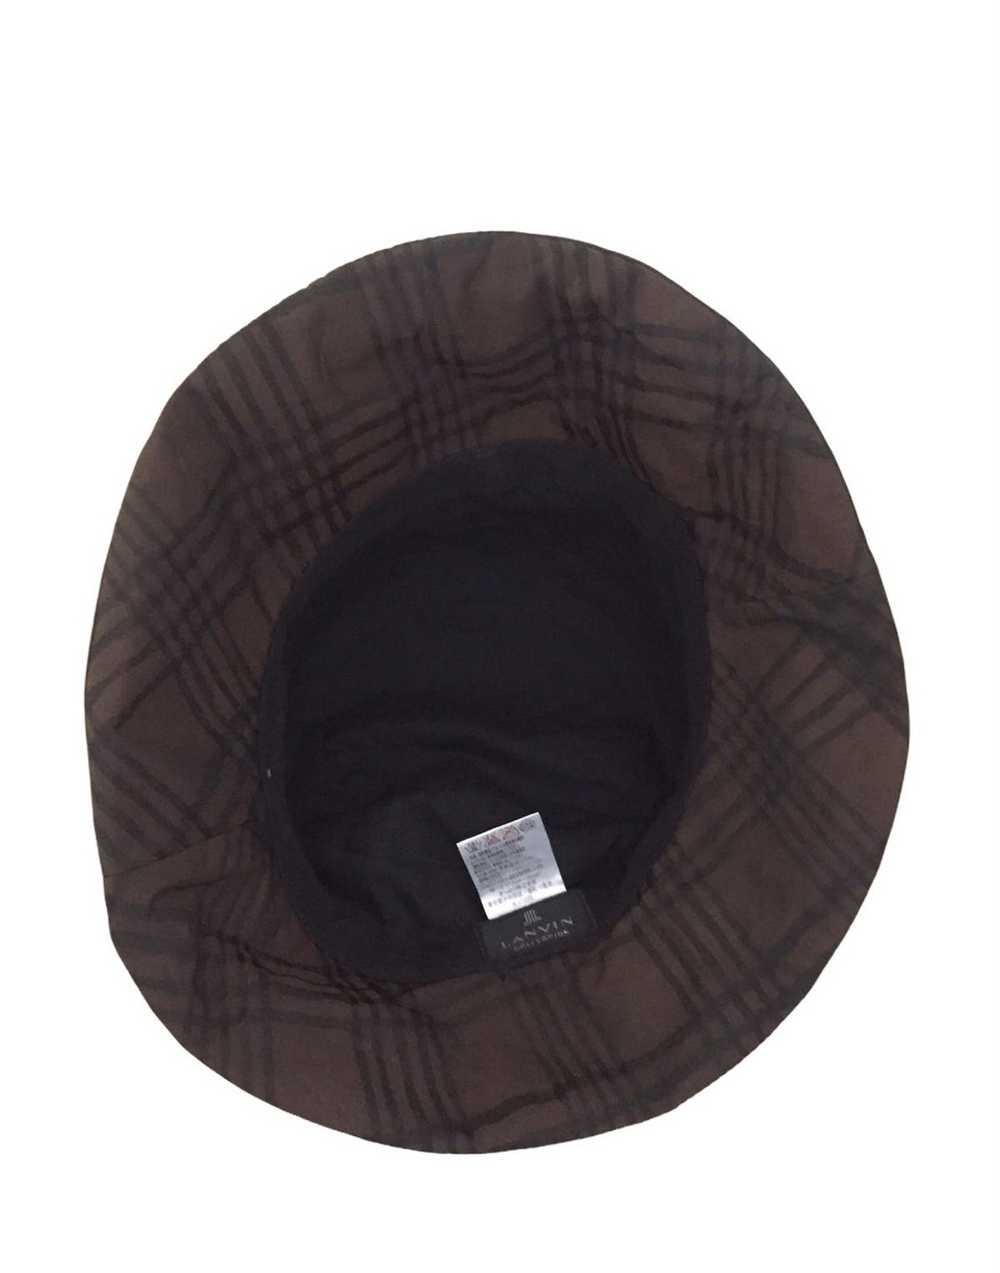 Lanvin Lanvin Collection Bucket Hat - image 4